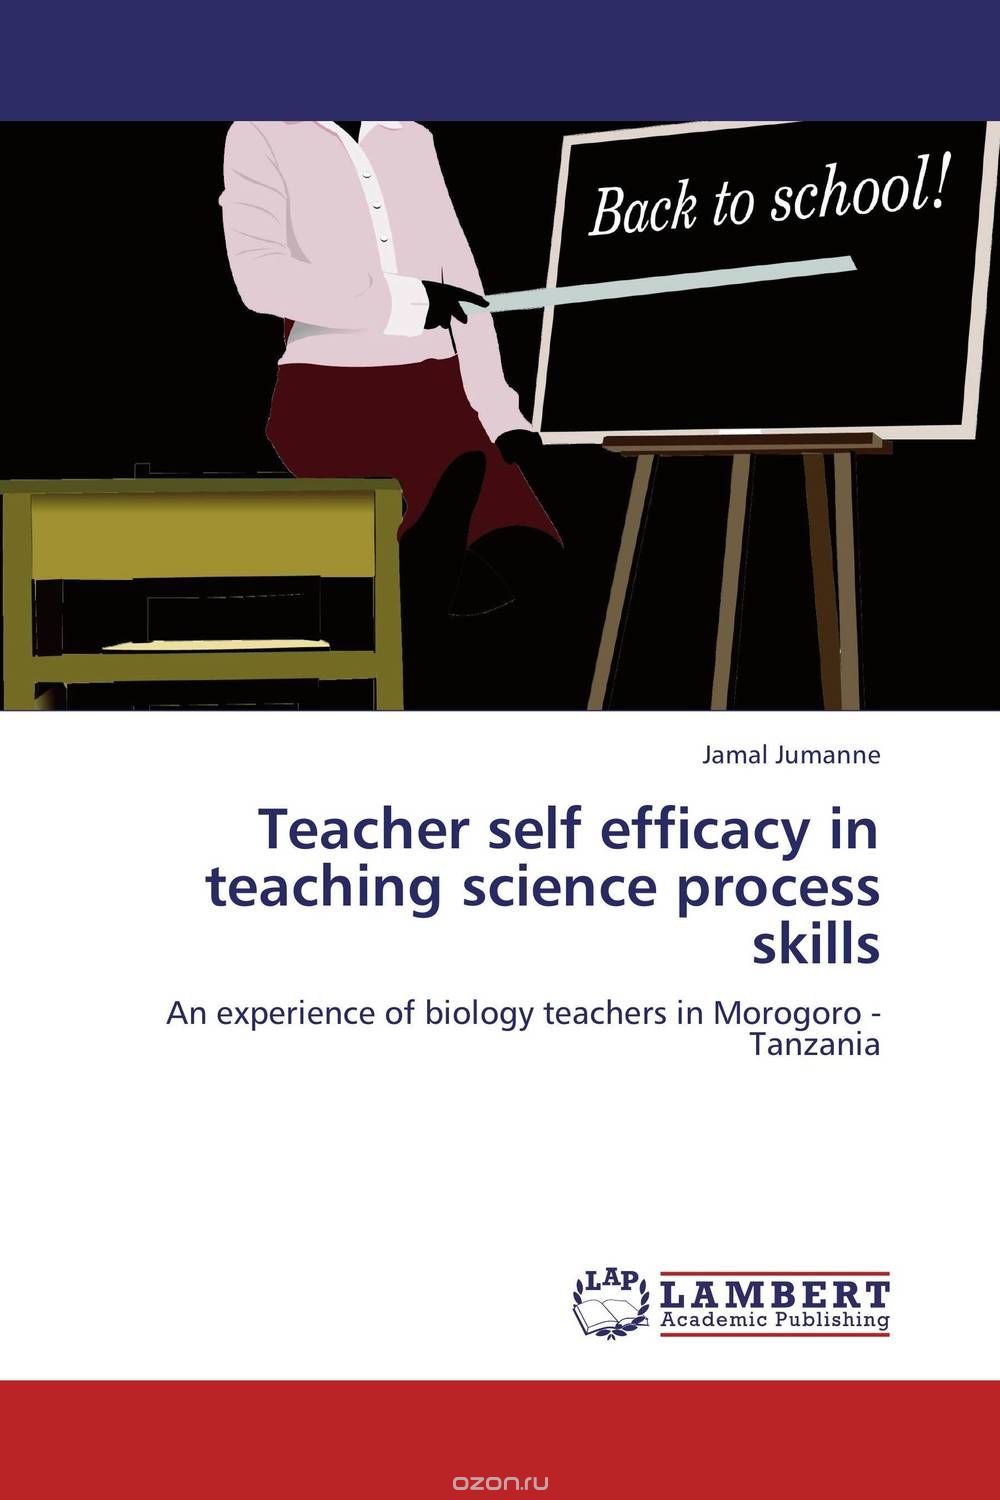 Скачать книгу "Teacher self efficacy in teaching science process skills"